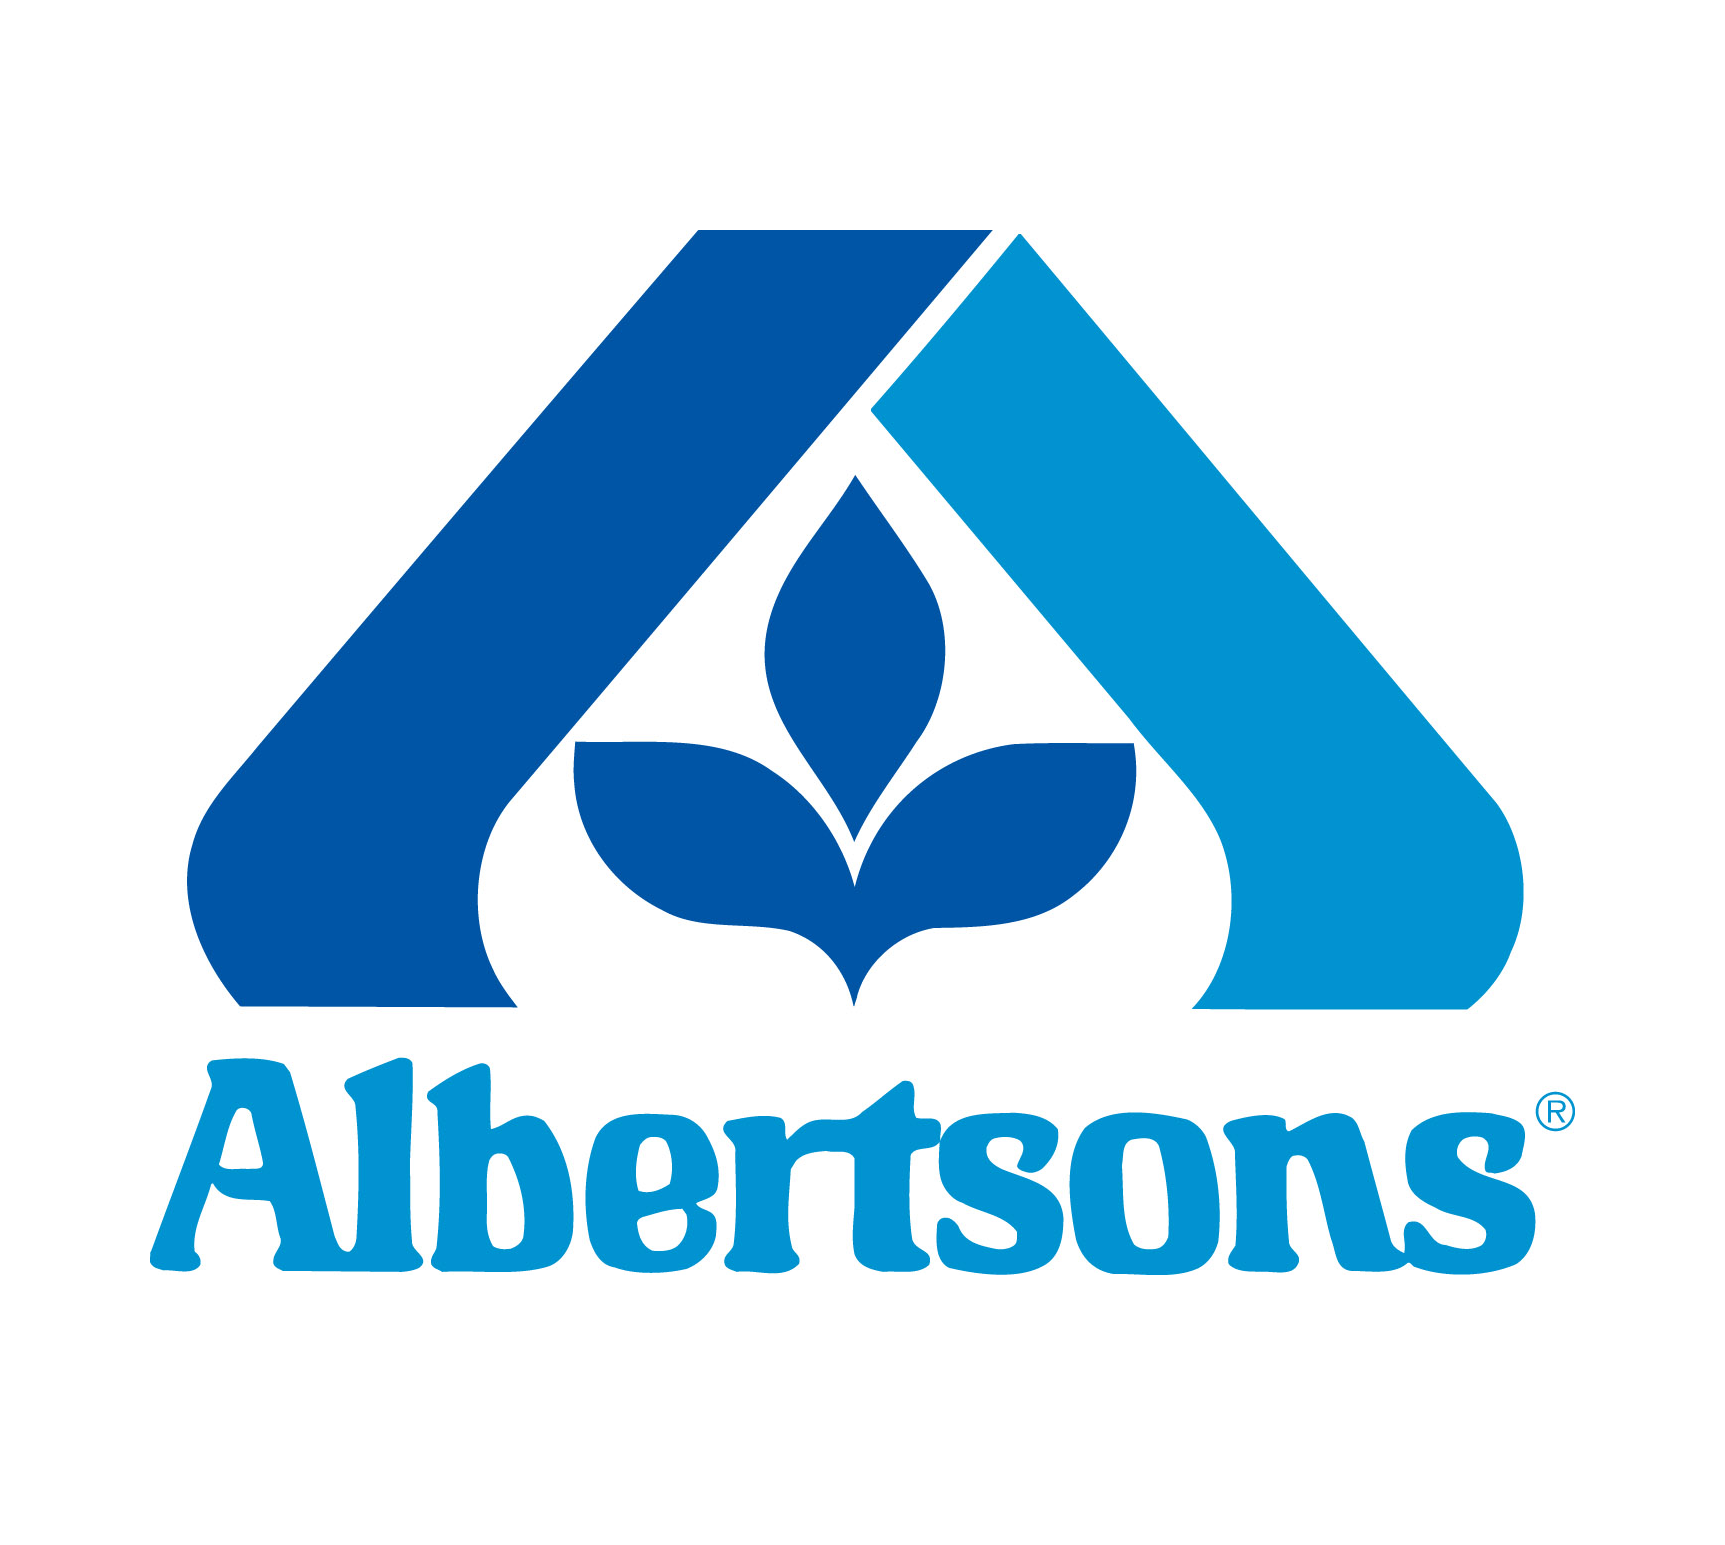 Albertsons-logo.png